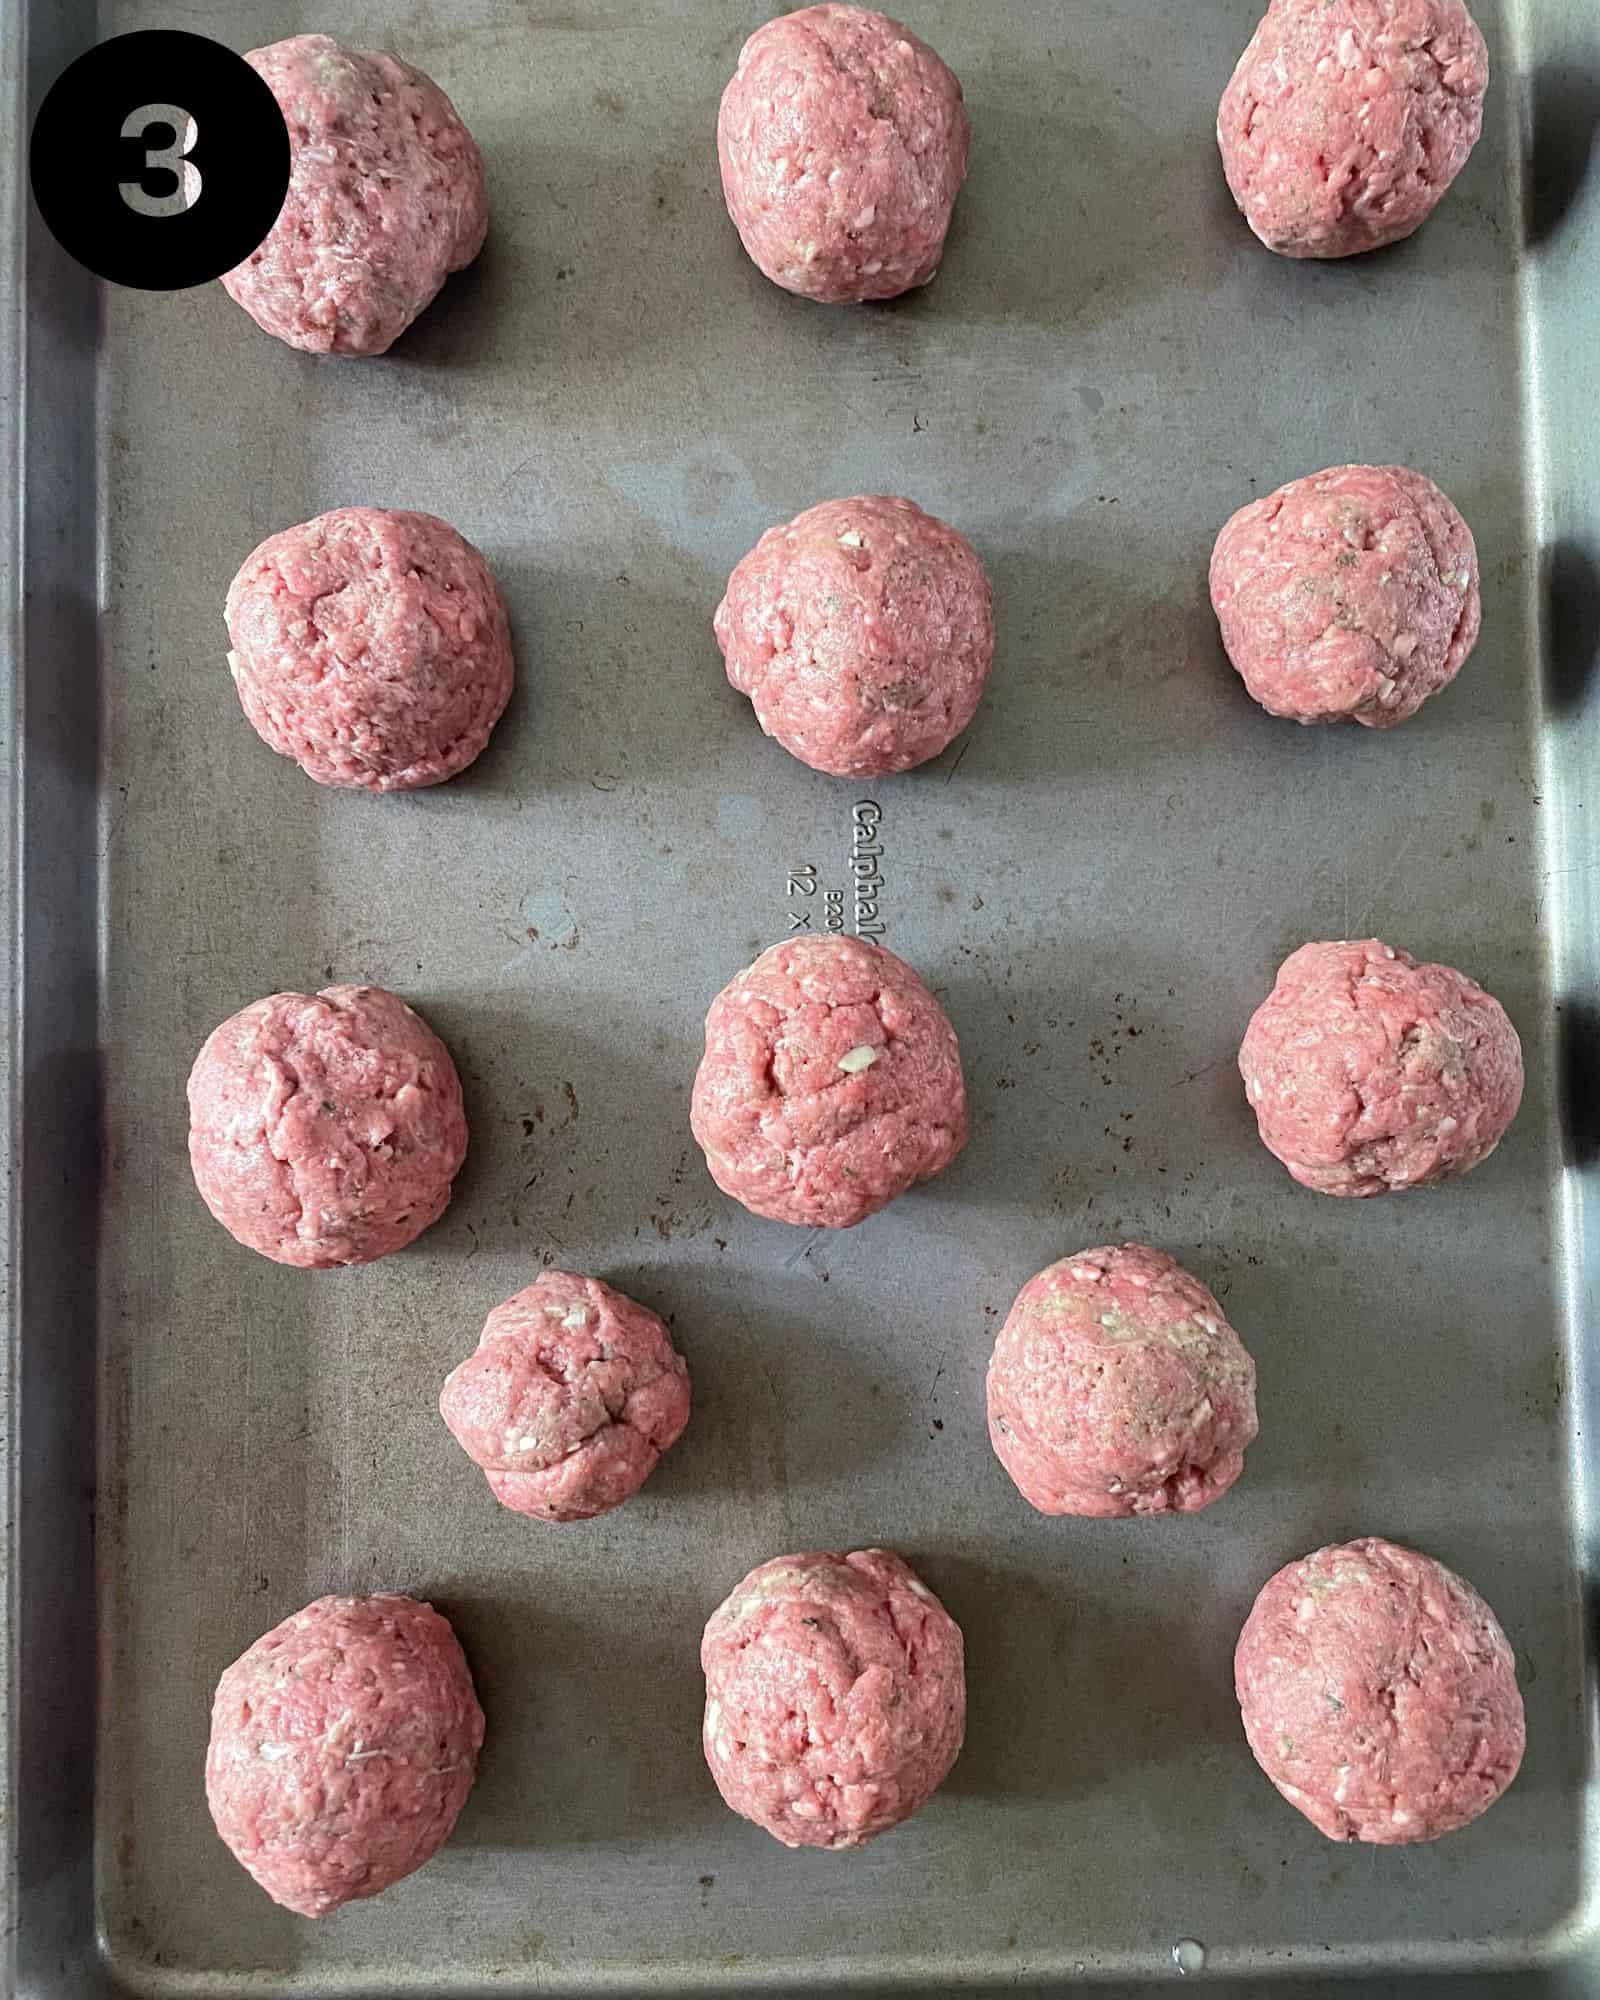 meatballs on a baking sheet.